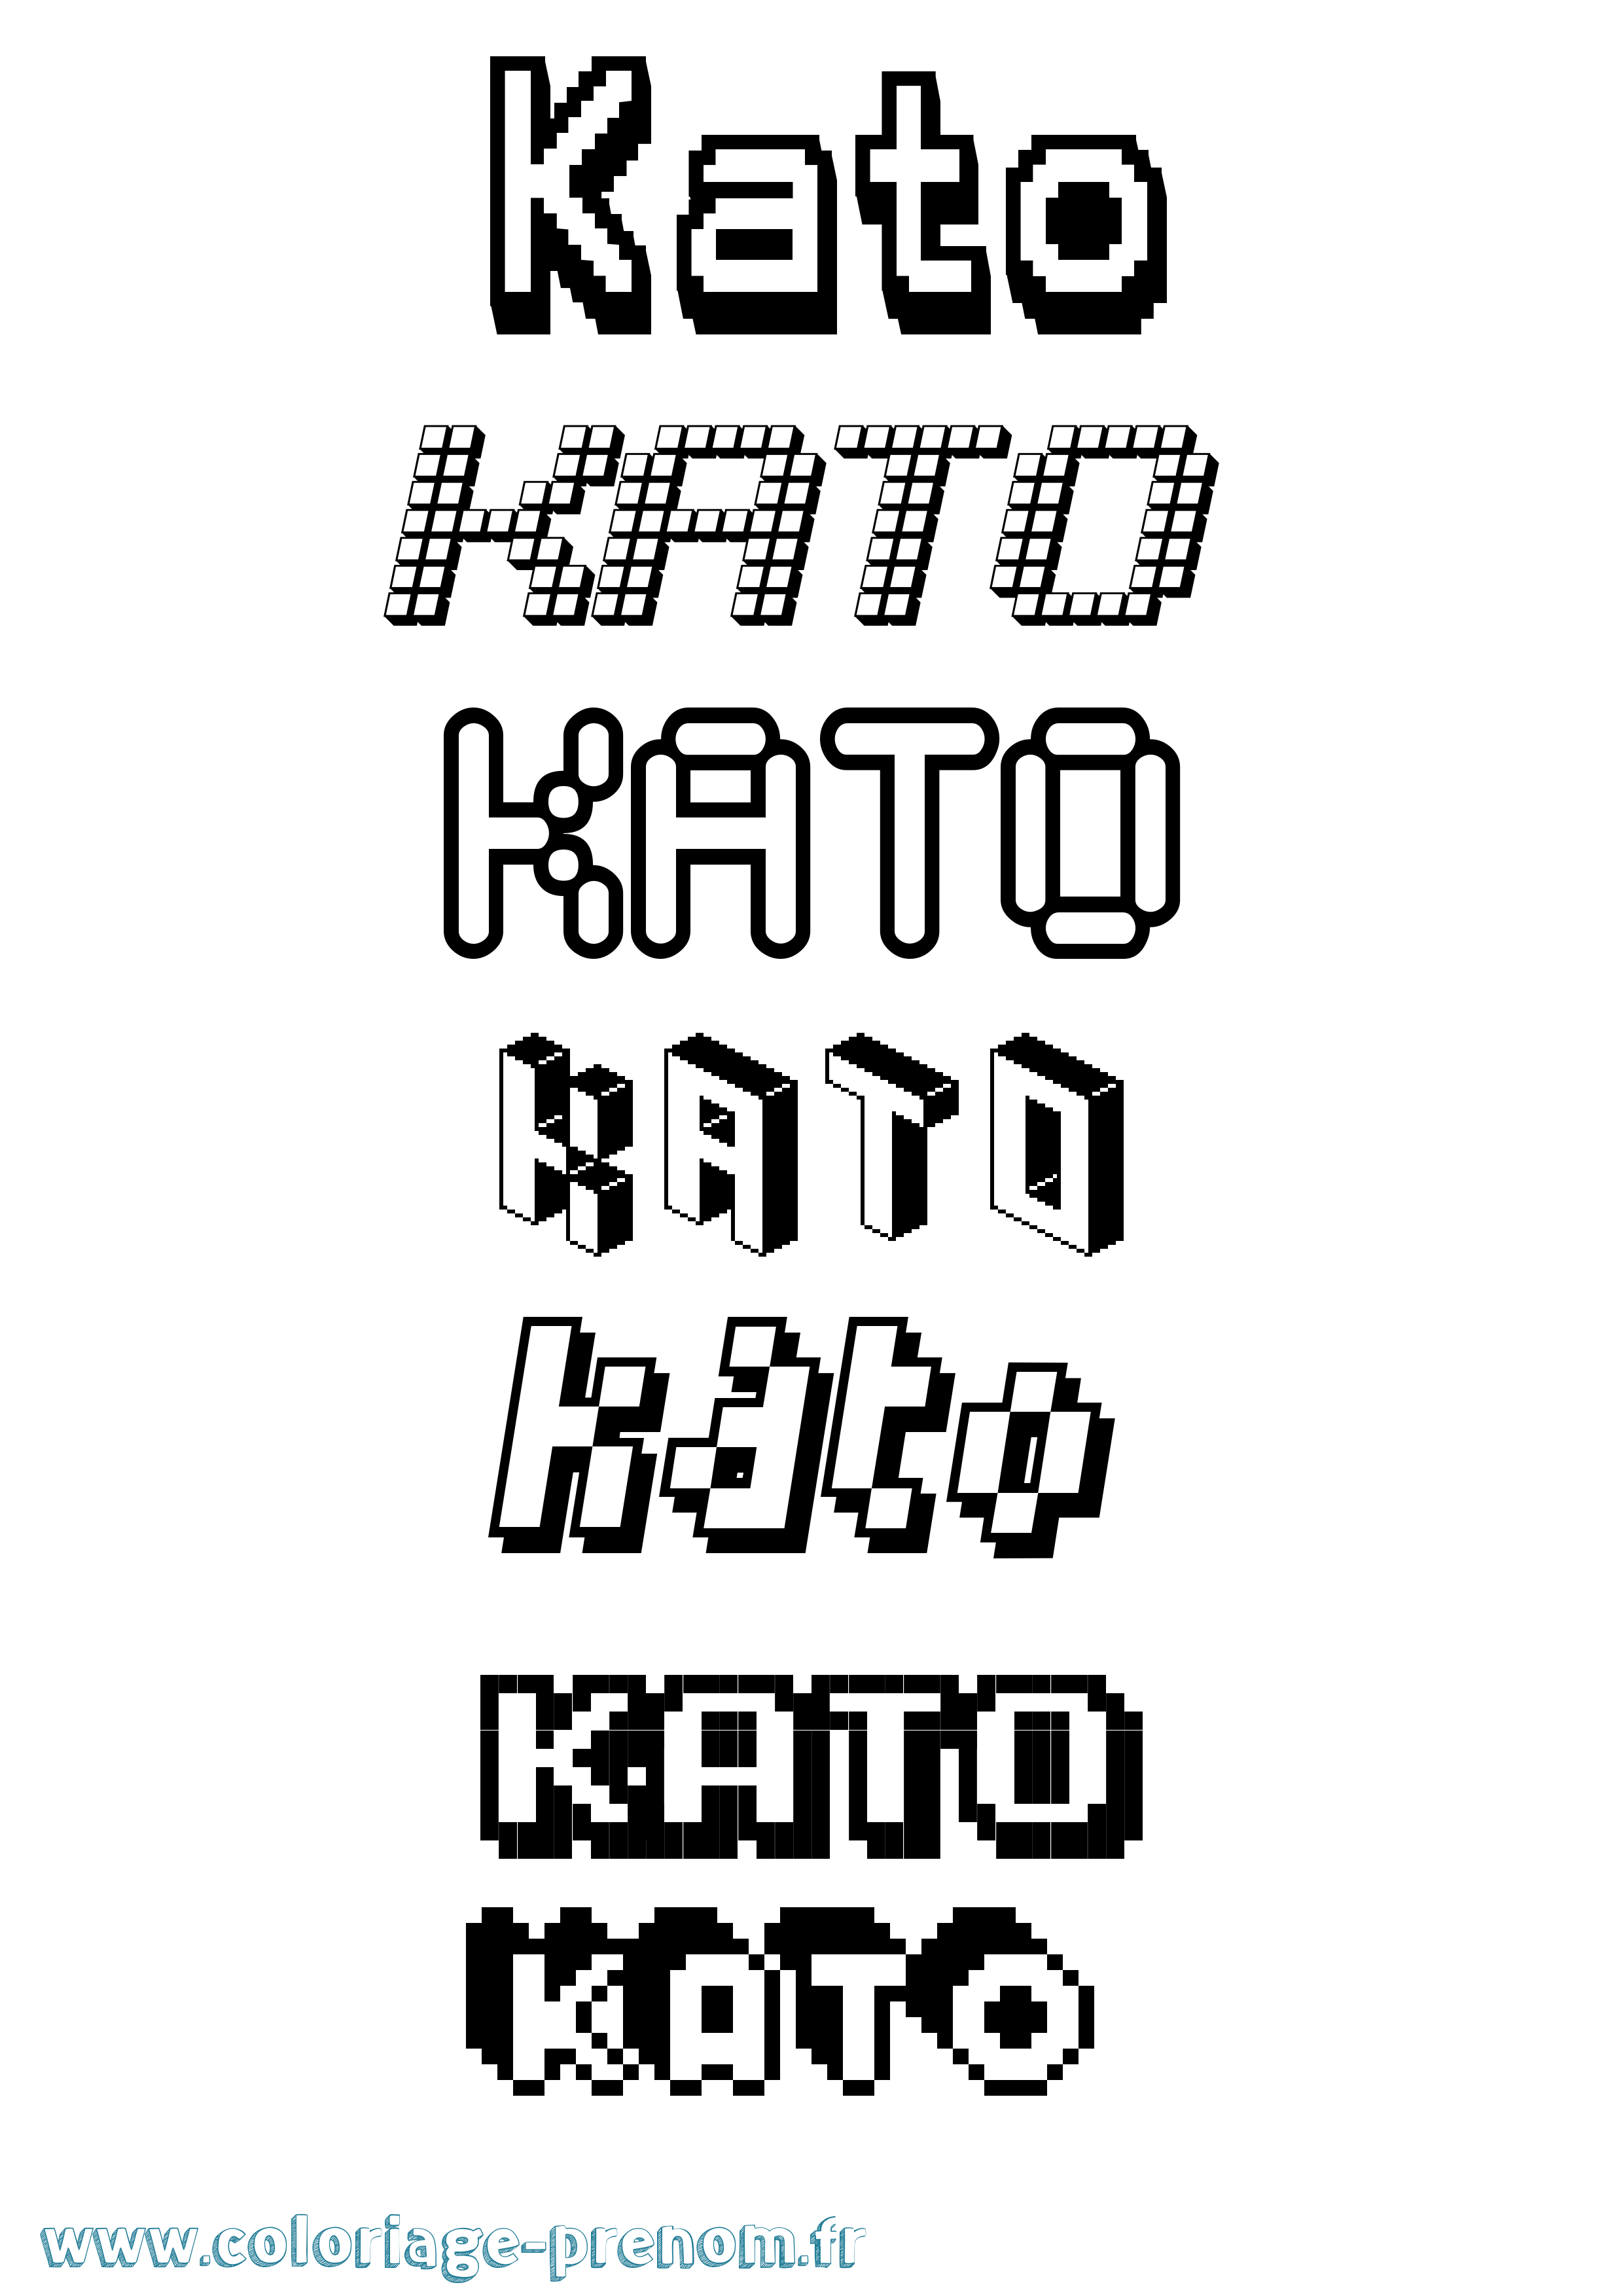 Coloriage prénom Kato Pixel